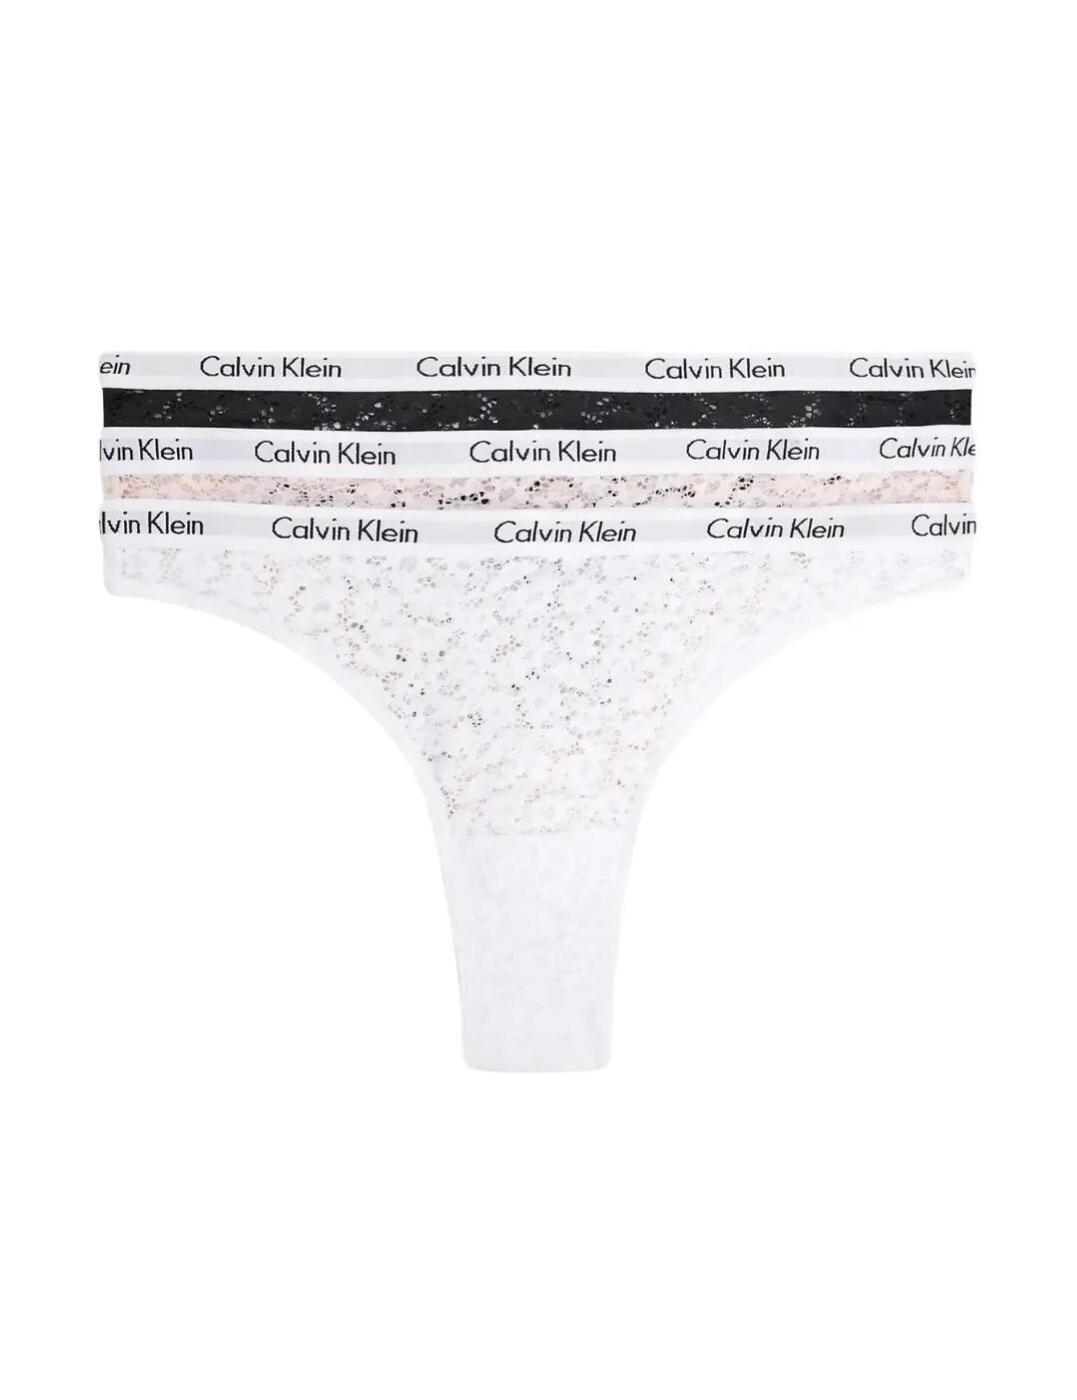 Calvin Klein Carousel Brazilian Brief 3 Pack Black/White/Nymphs Thigh